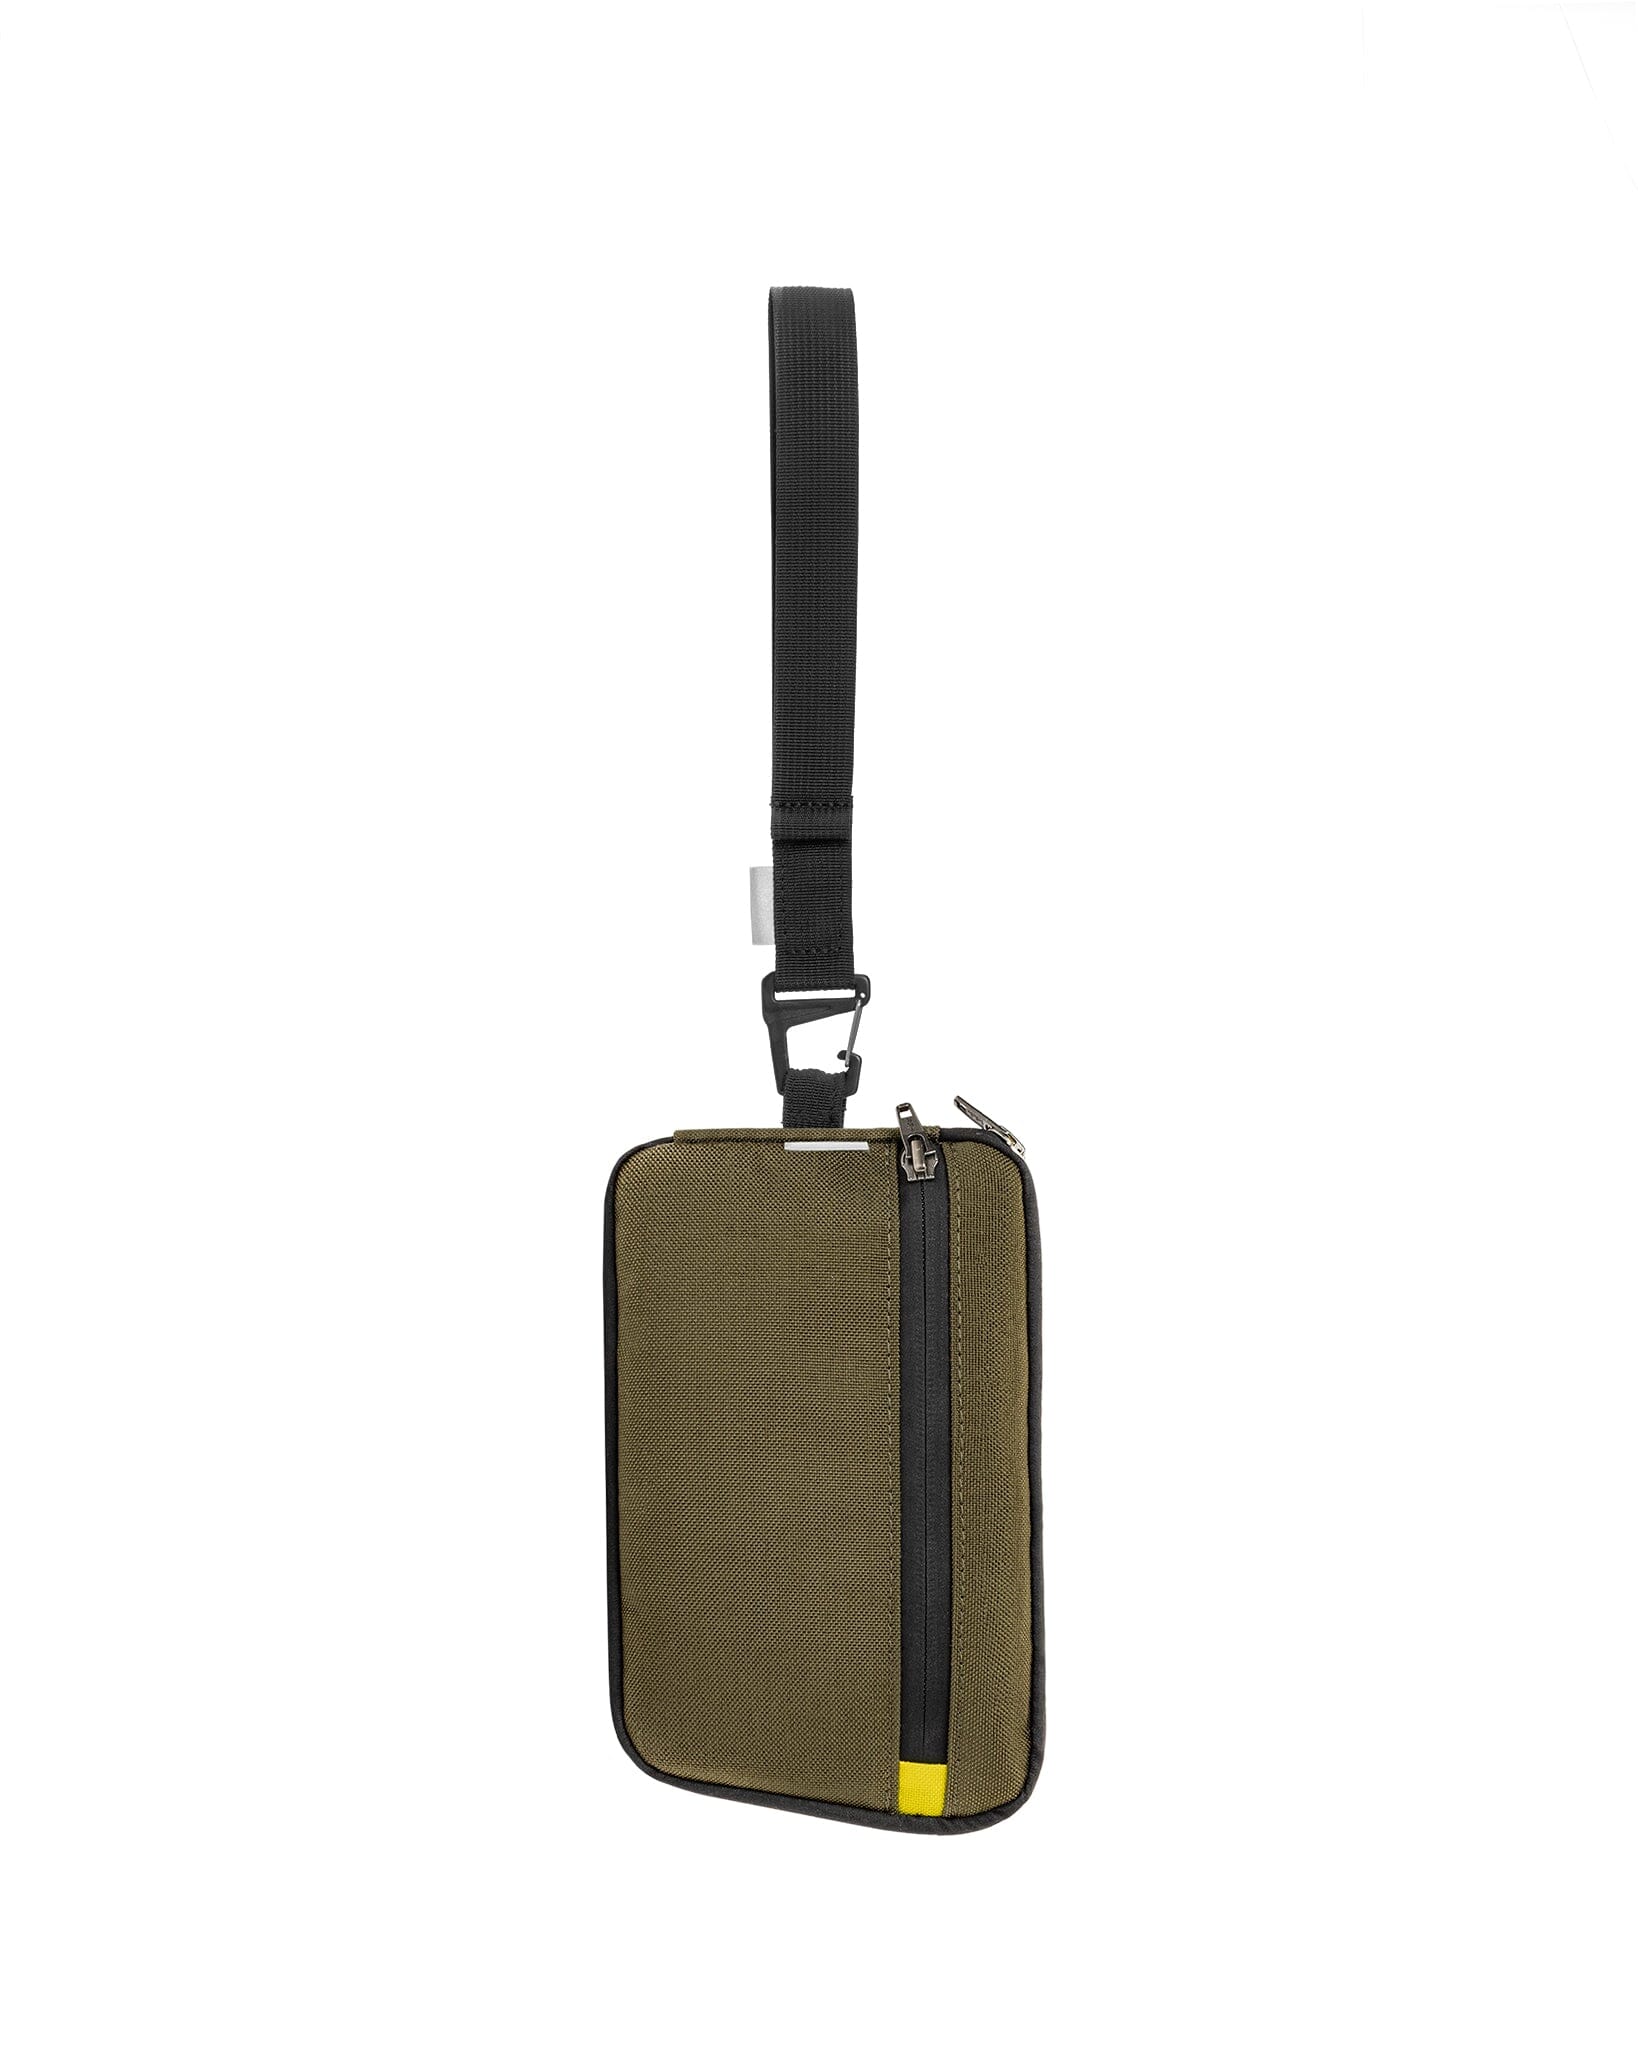 AUX™ Pocket - Defiant Olive Cordura Bag bolstr Ranger Green/Yellow Clutch 